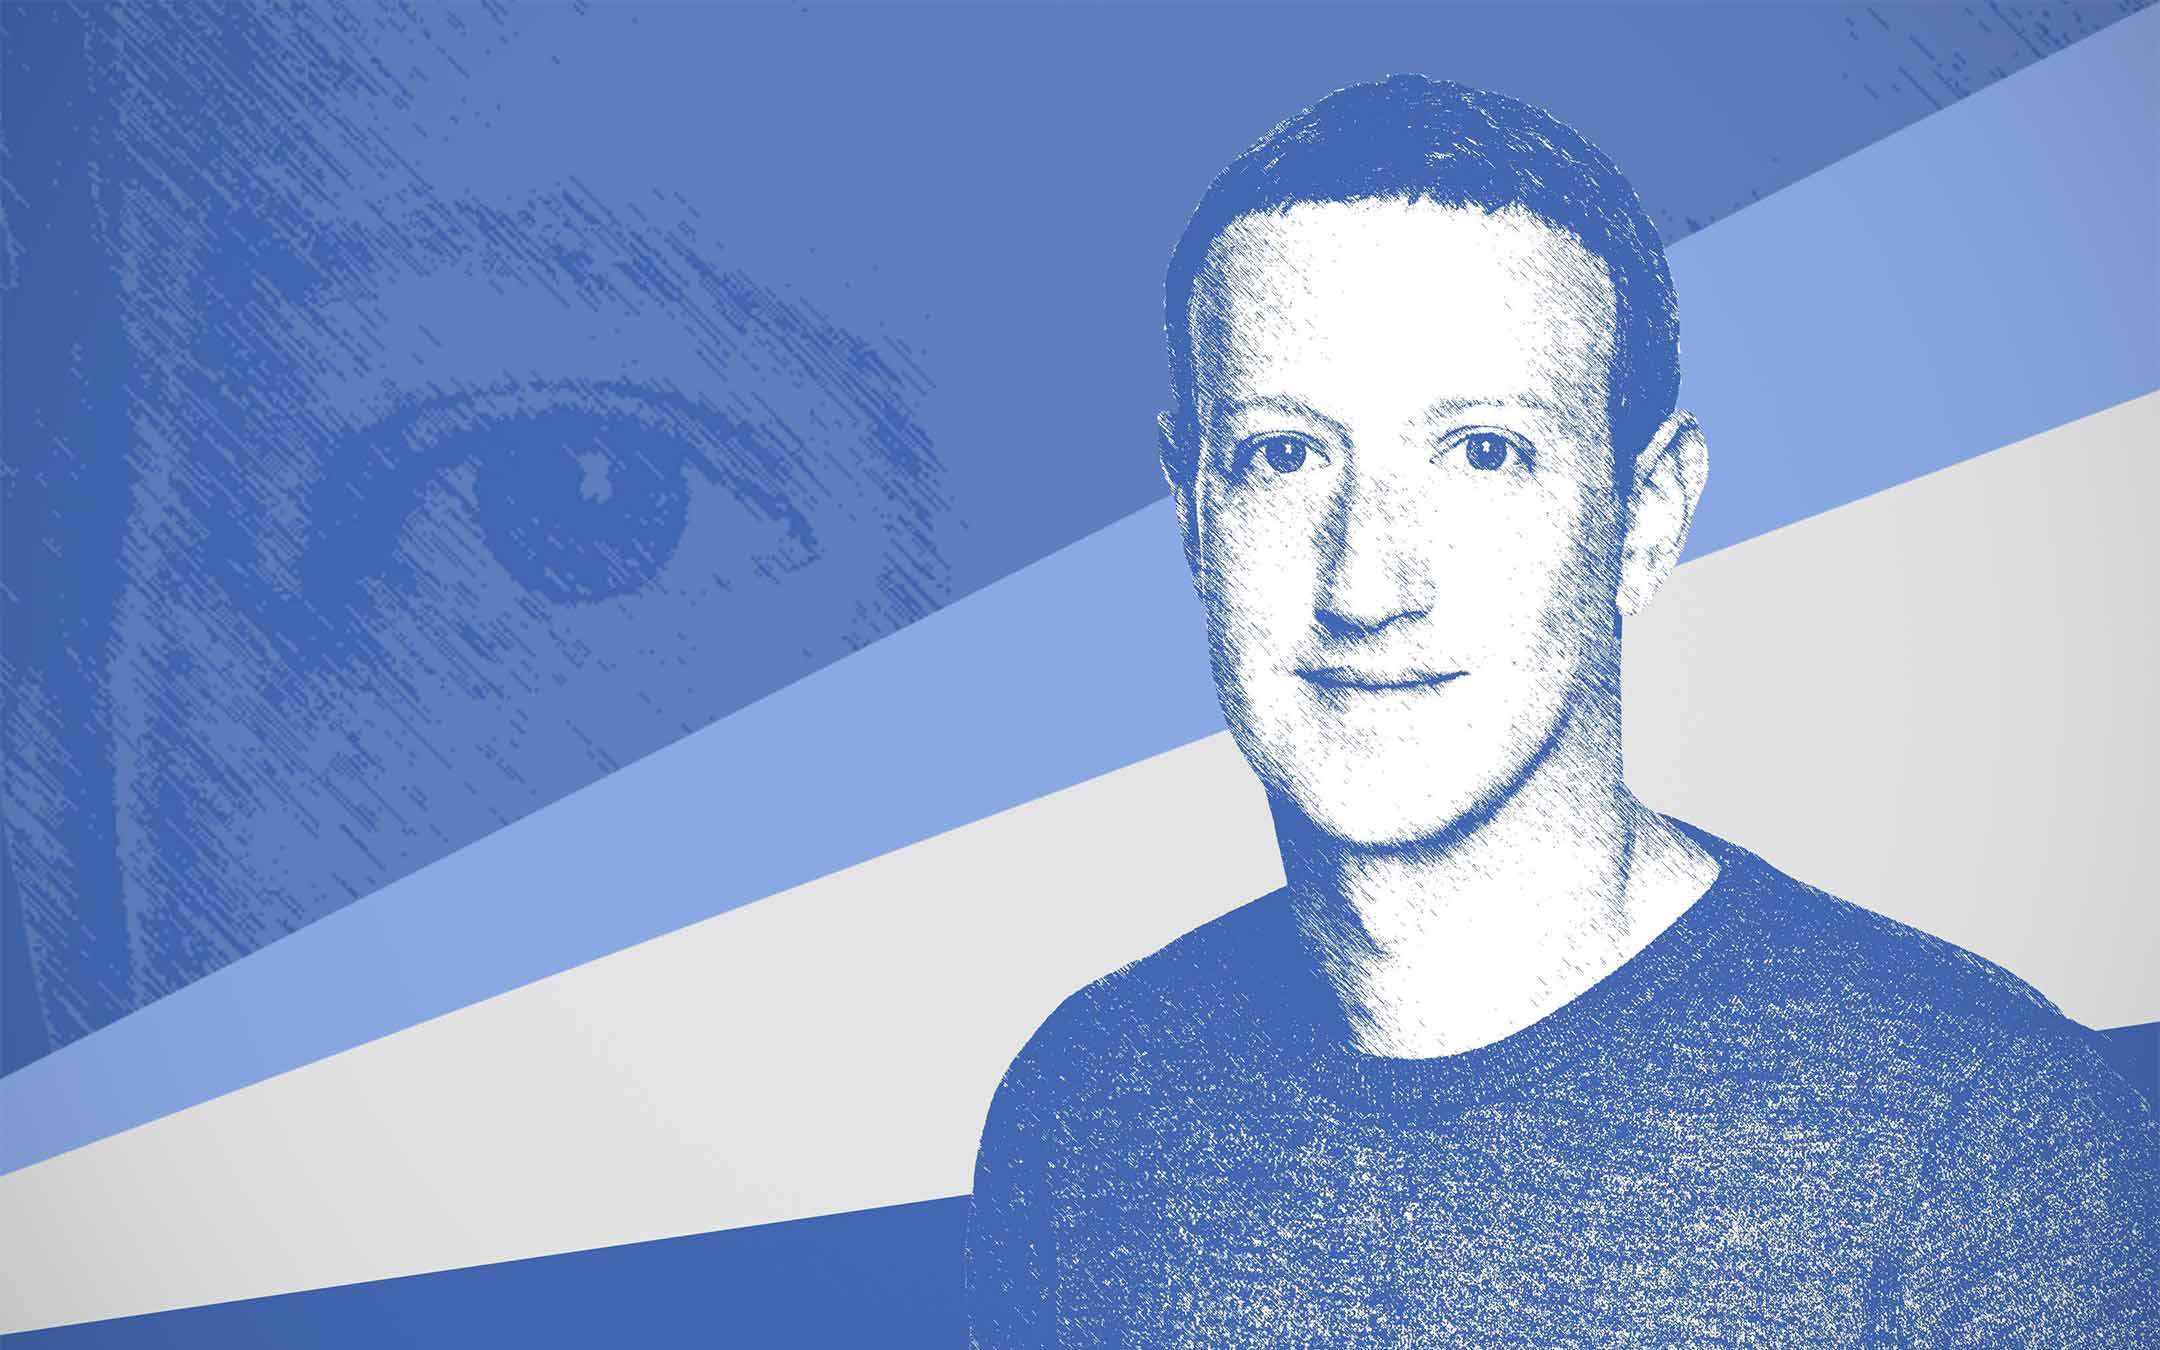 Mark Zuckerberg also cuckoos on Clubhouse